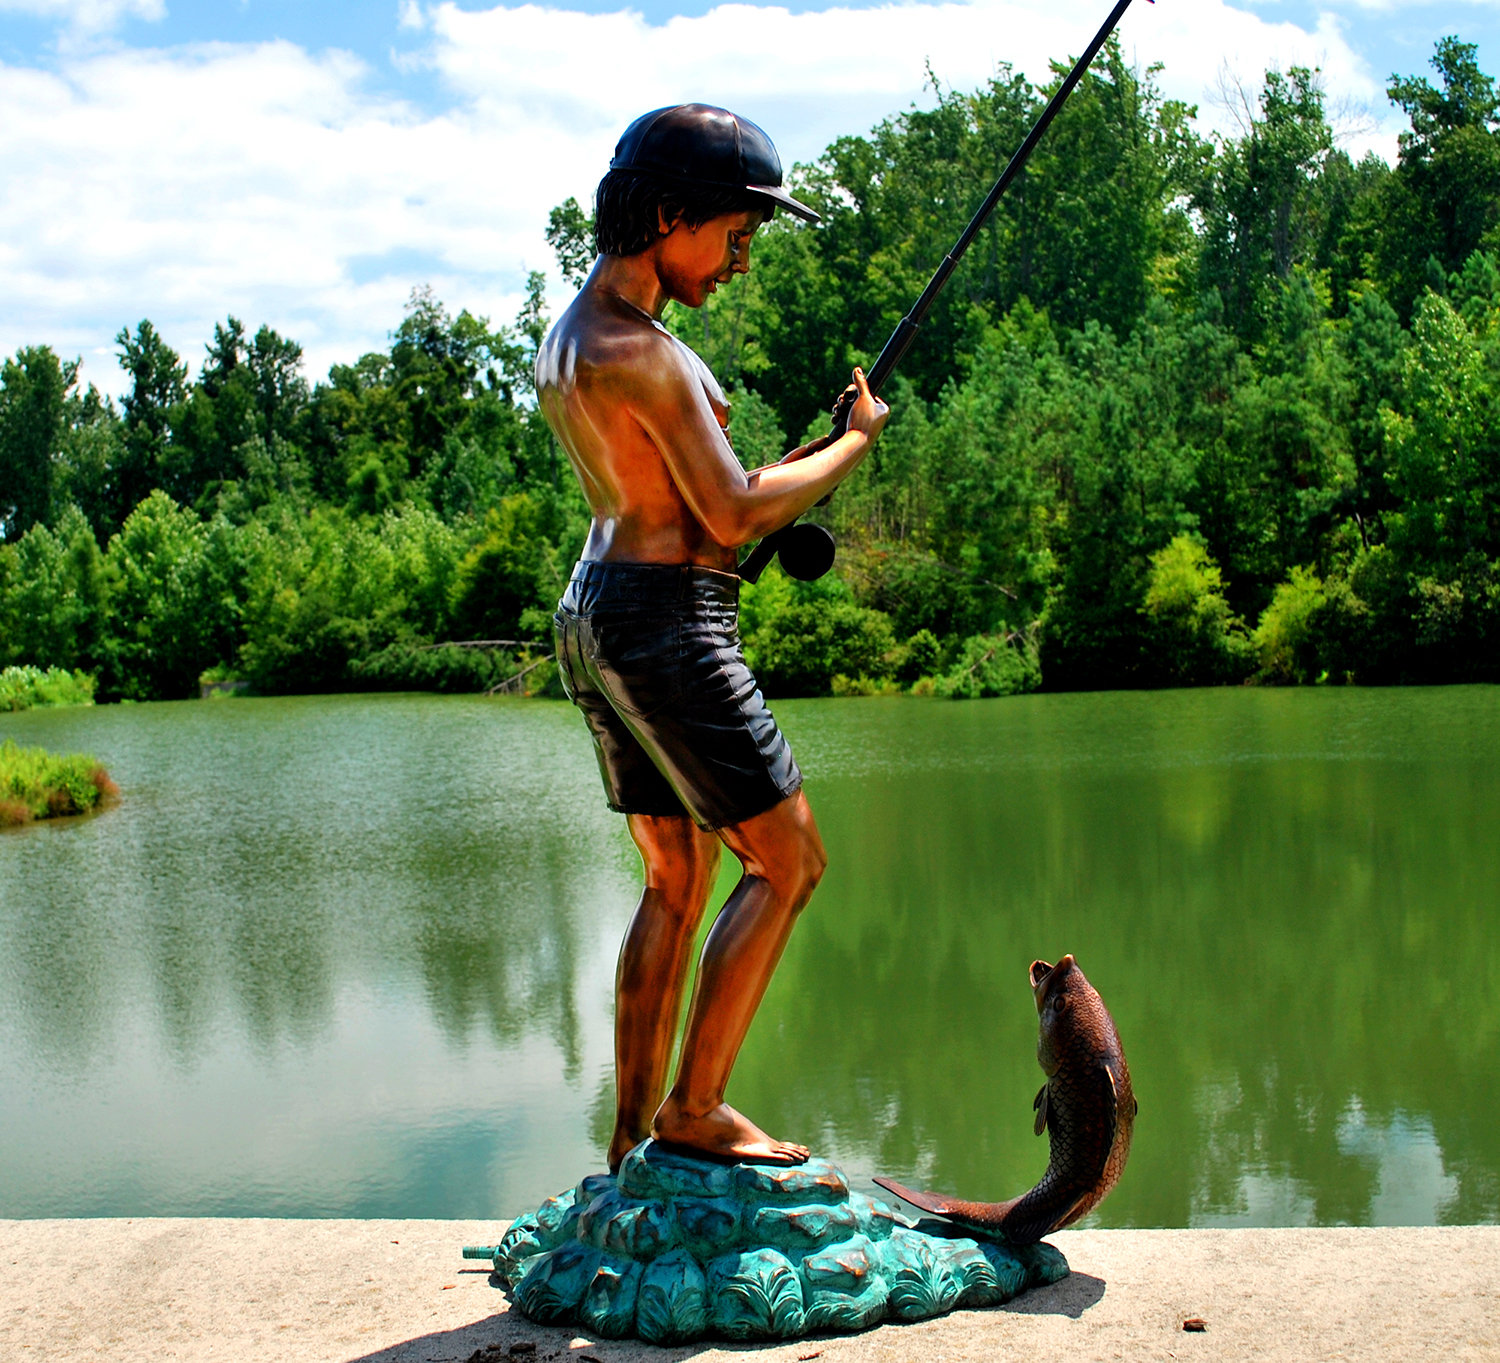 Bronze Boy Fishing Fountain Sculpture - Metropolitan Galleries Inc.